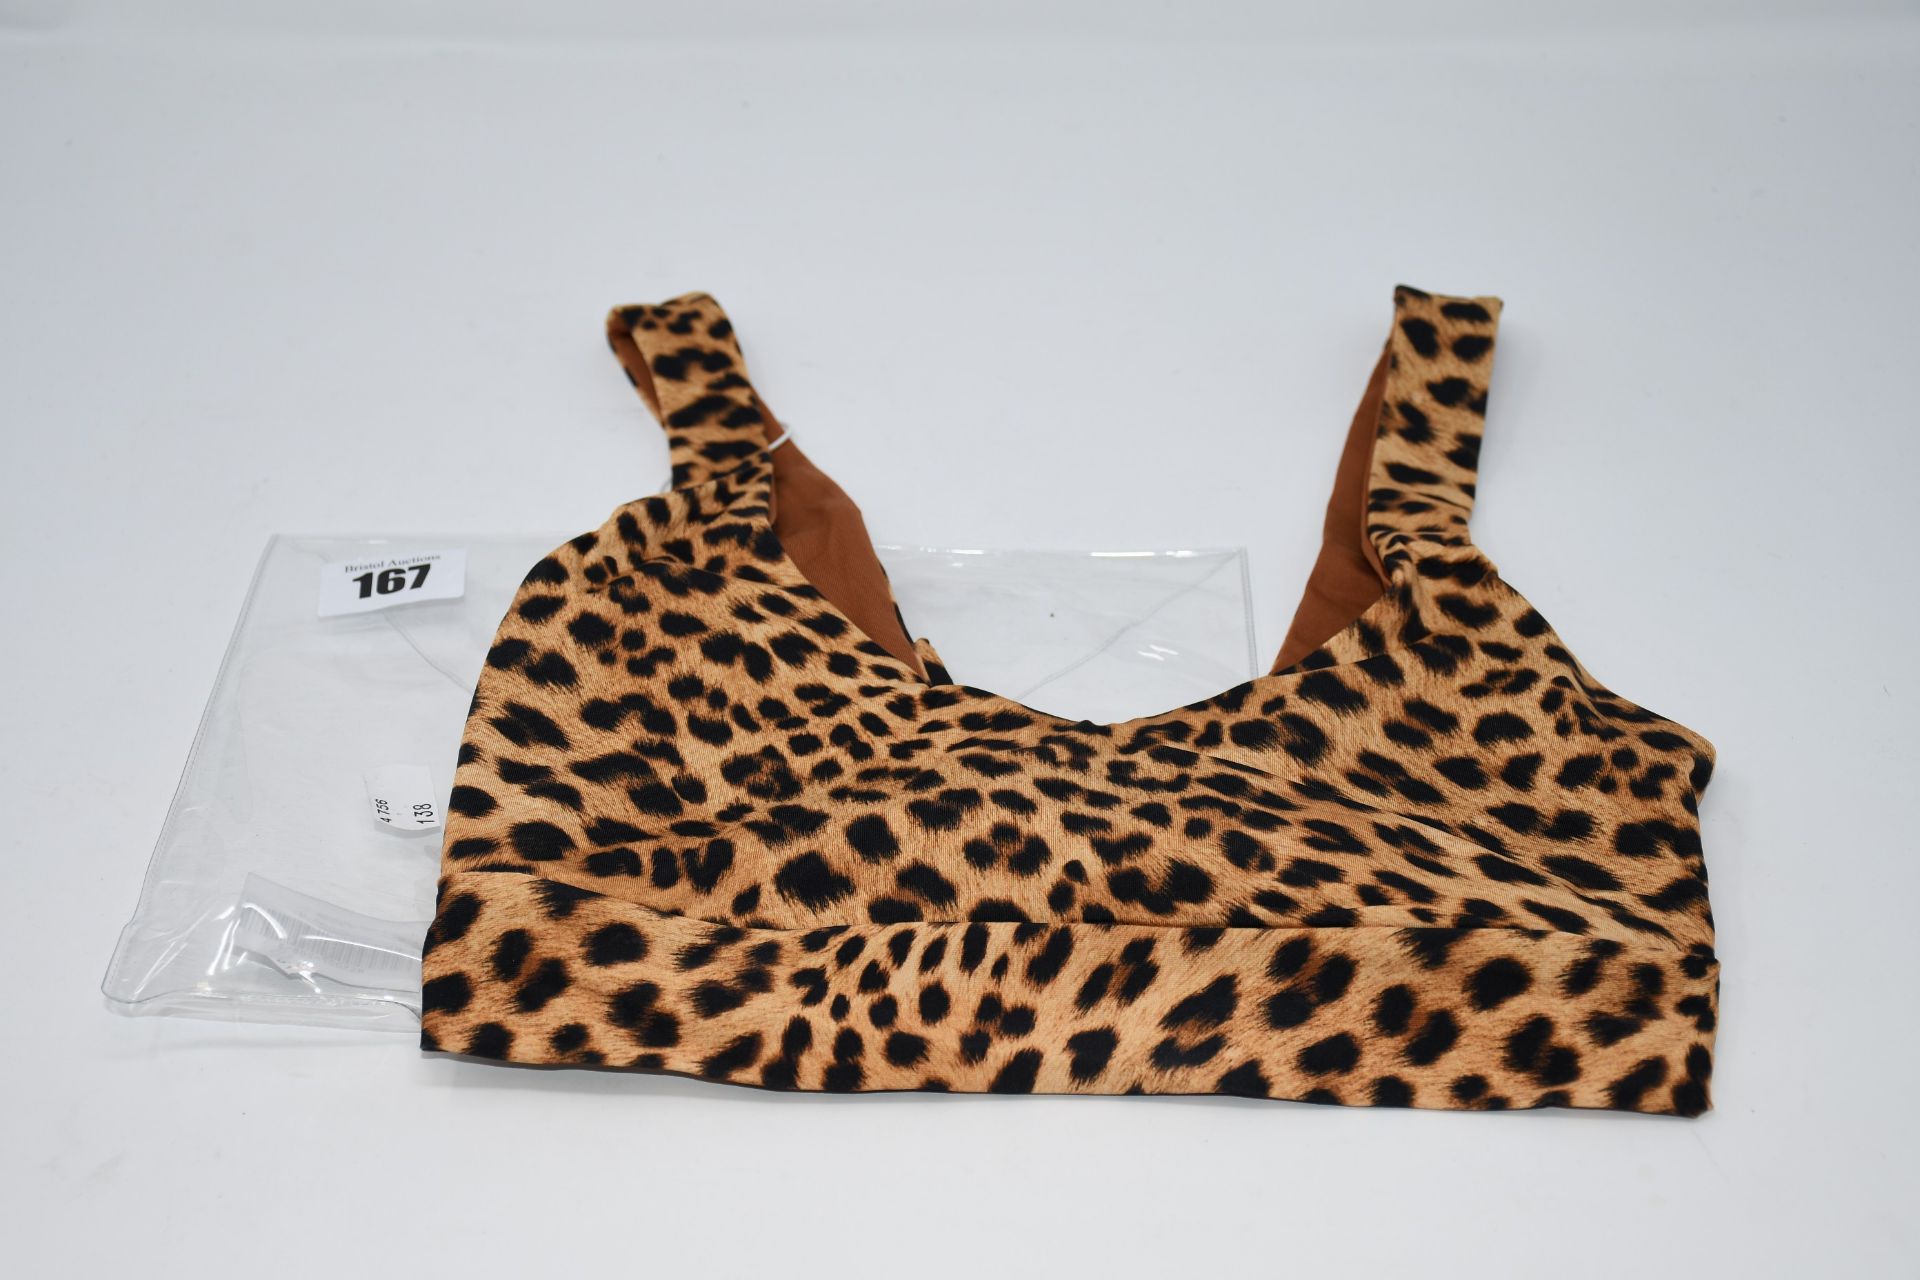 One as new Monday Swimwear Jamaica Top Jaguar size M.